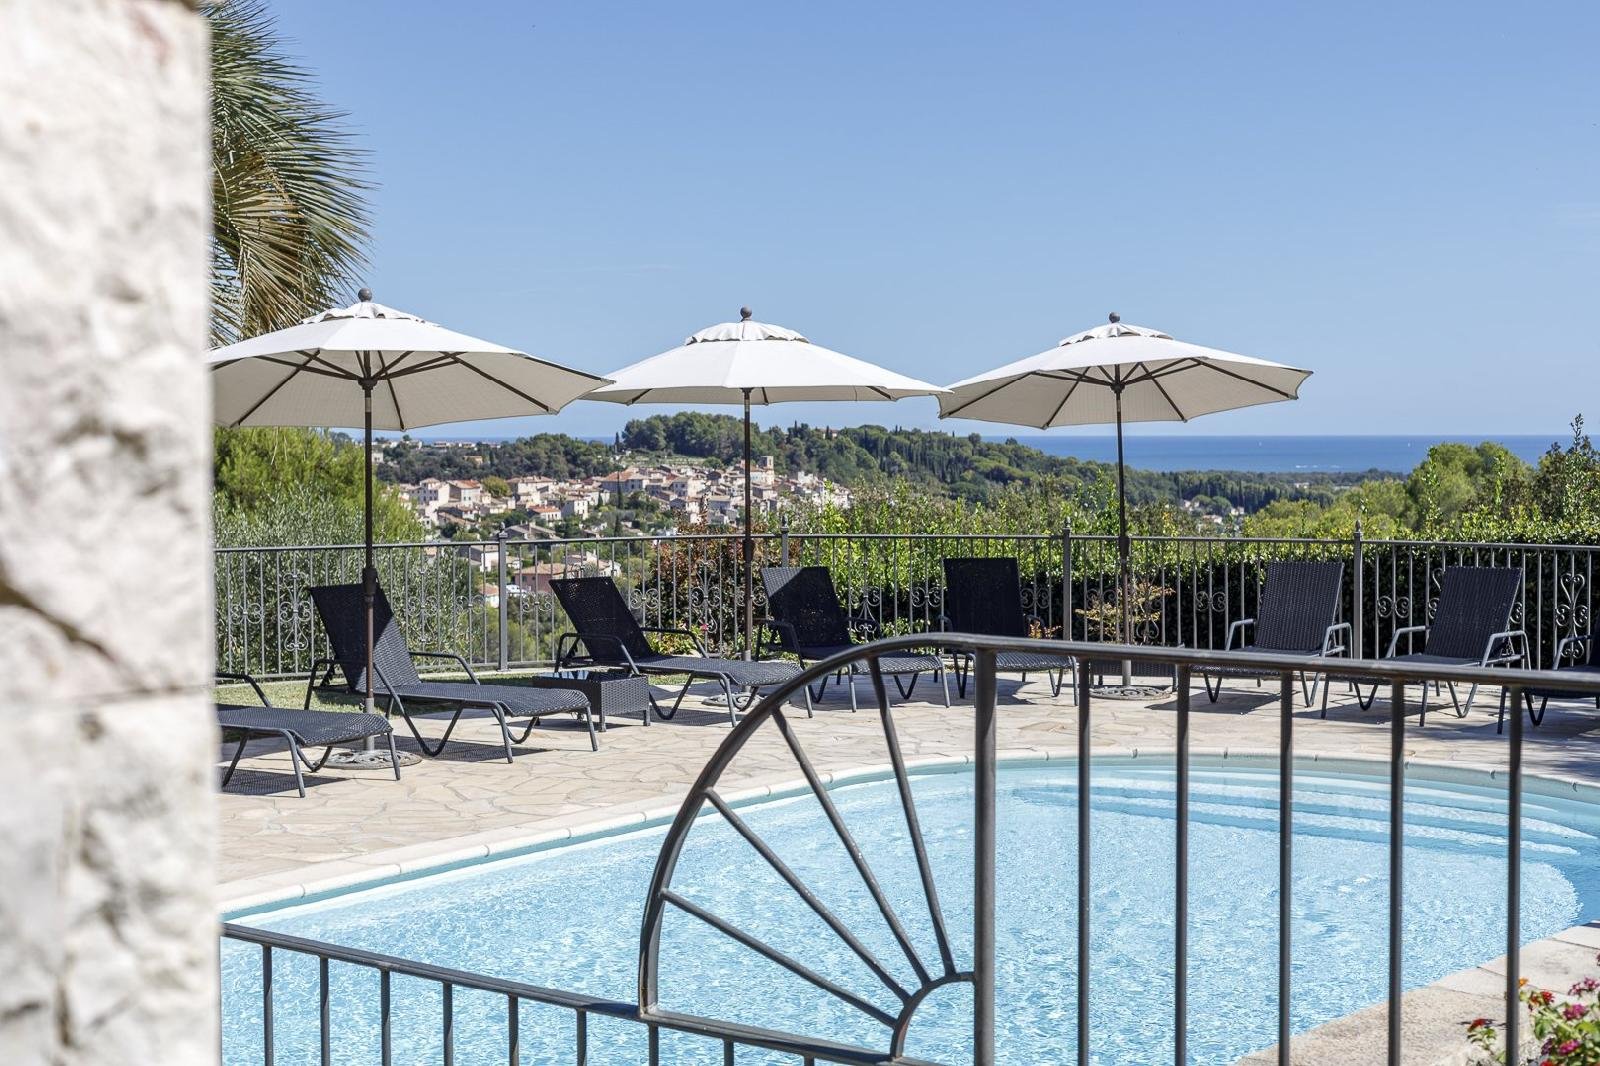 Francis York Charming French Riviera Villa With Hilltop Village And Sea Views 21.jpg